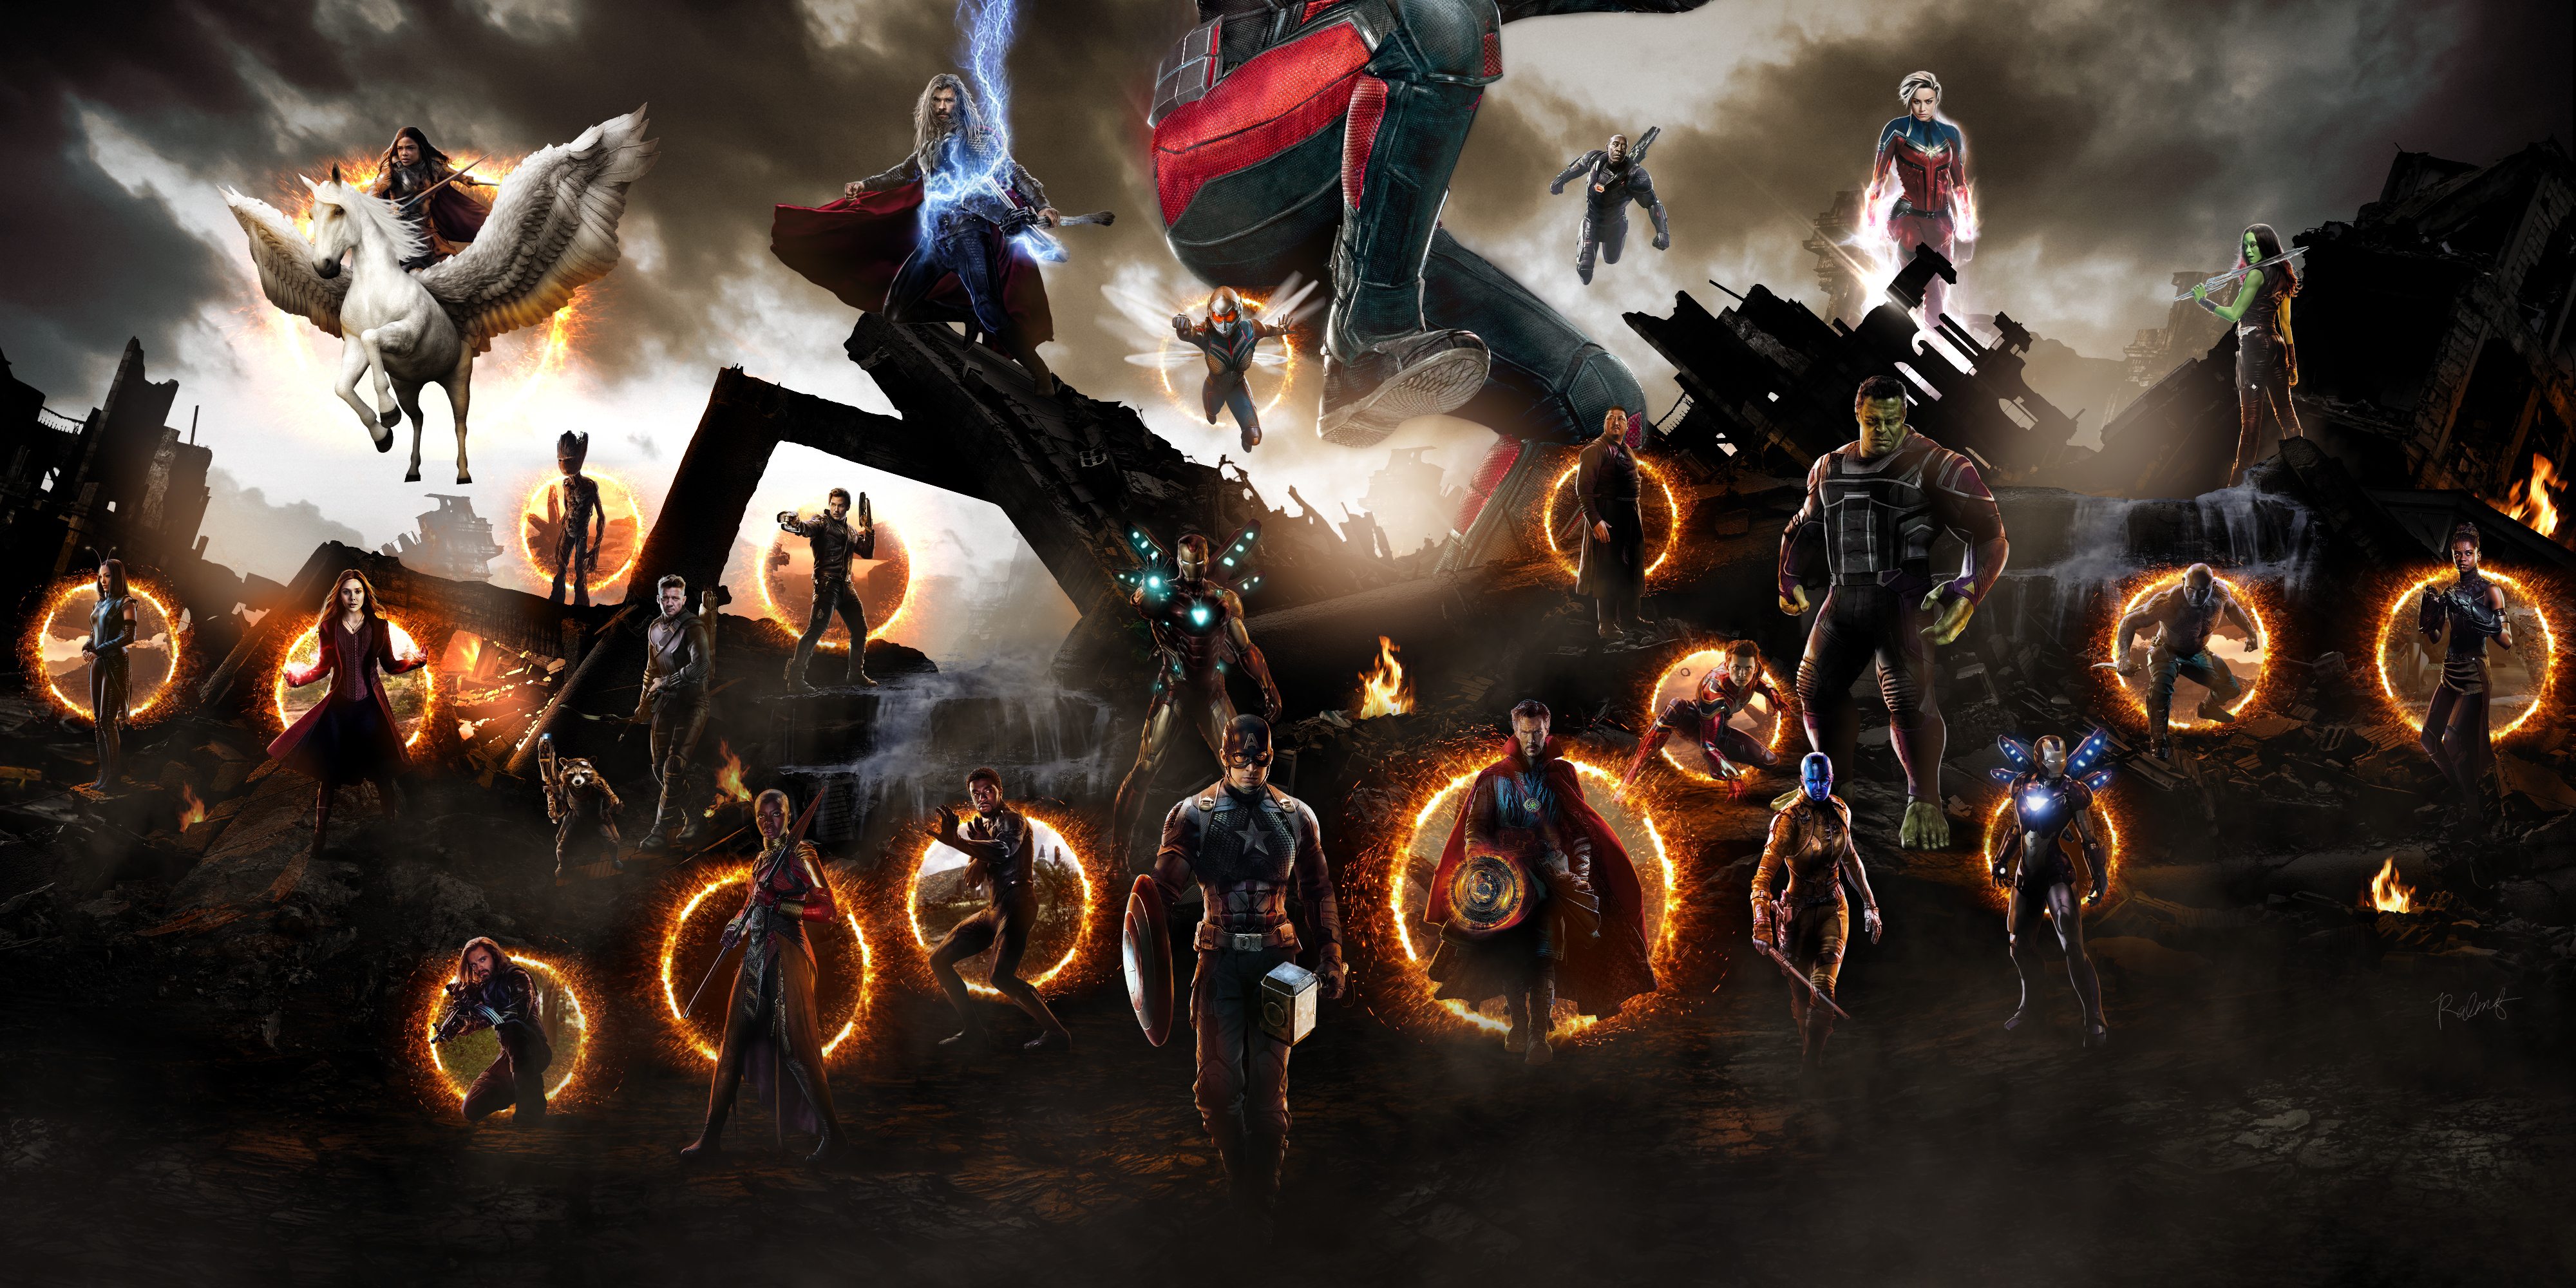 Avengers Endgame War Scene Fanart Wallpaper, HD Movies 4K Wallpapers